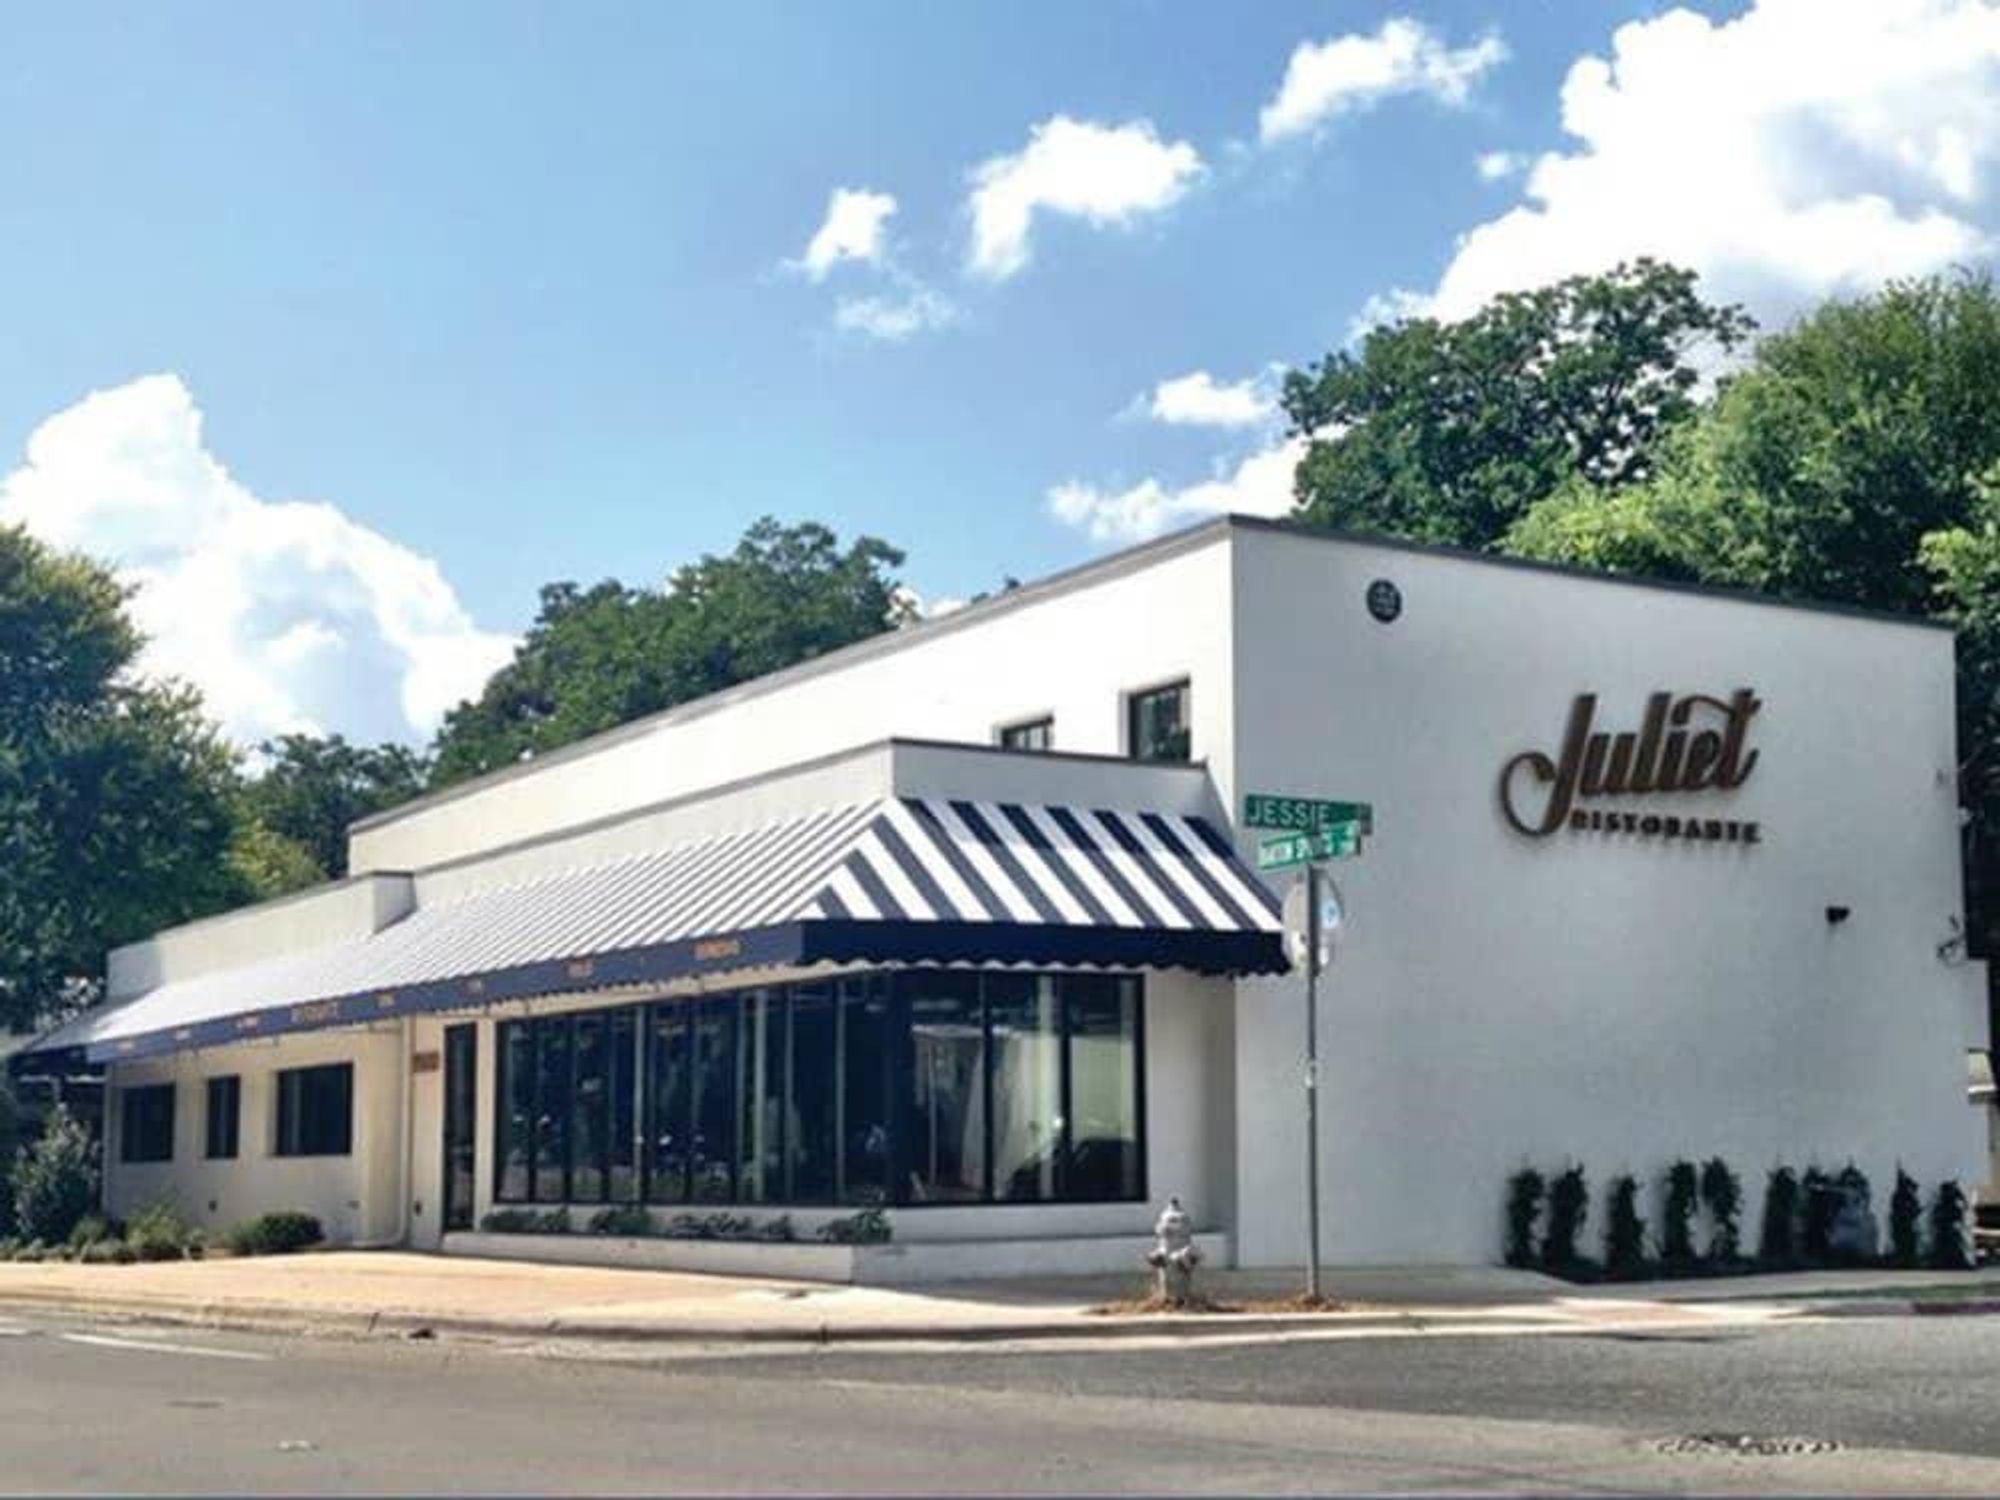 Juliet Ristorante_Austin restaurant_Barton Springs_exterior_2015